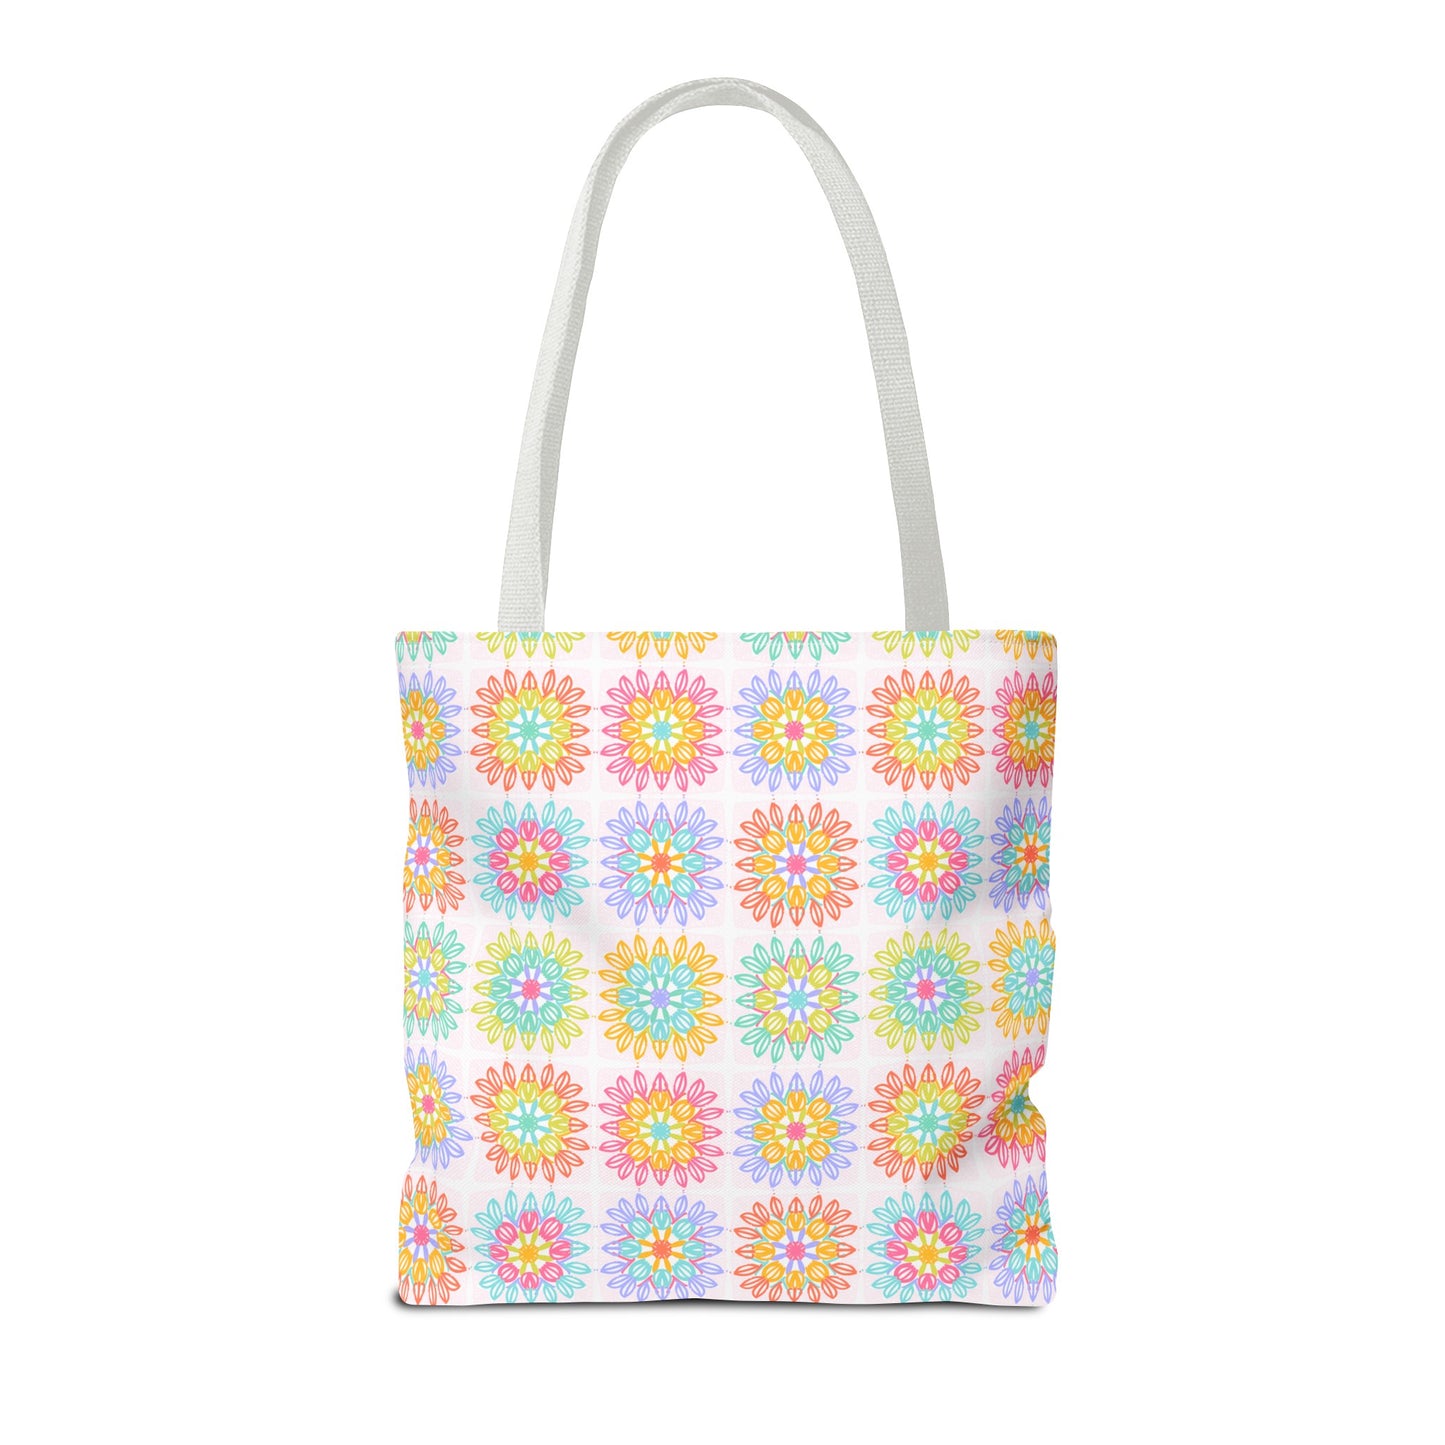 Granny Square in Summer Lovin’ | Tote Bag | Crochet | Yarn | Knit | Craft